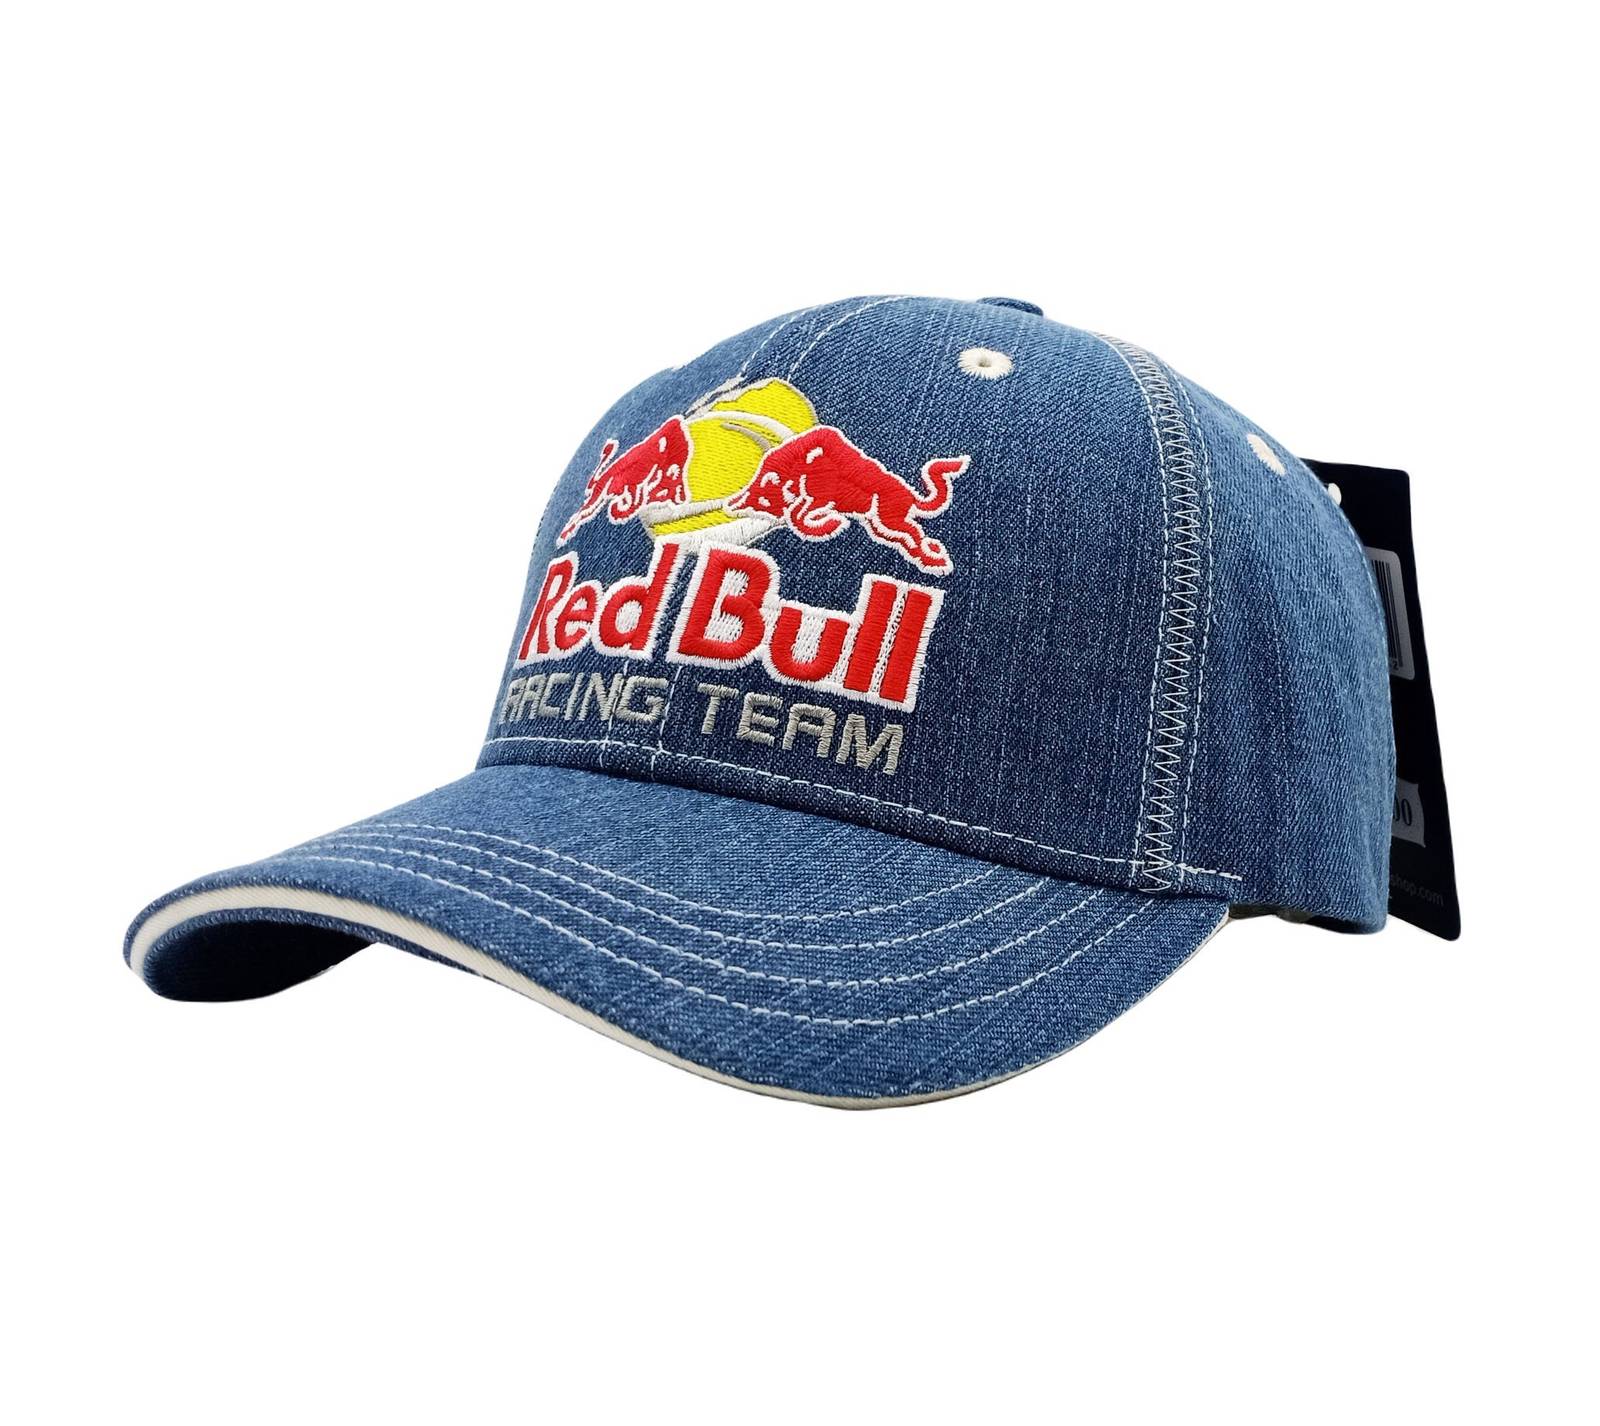 Red Bull Cap Adjustable Racing Team Hat